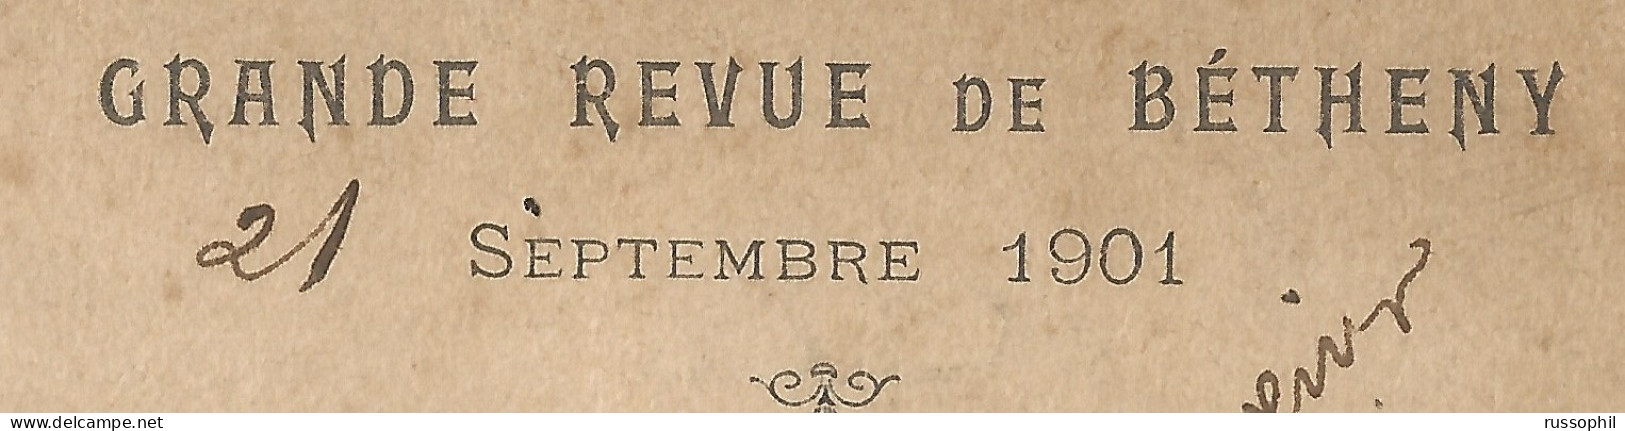 FRANCO RUSSIAN ALLIANCE - GRANDE REVUE DE BETHENY - 21 SEPTEMBRE 1901 - VUE DE BETHENY, PRES REIMS - 1901 - Eventi